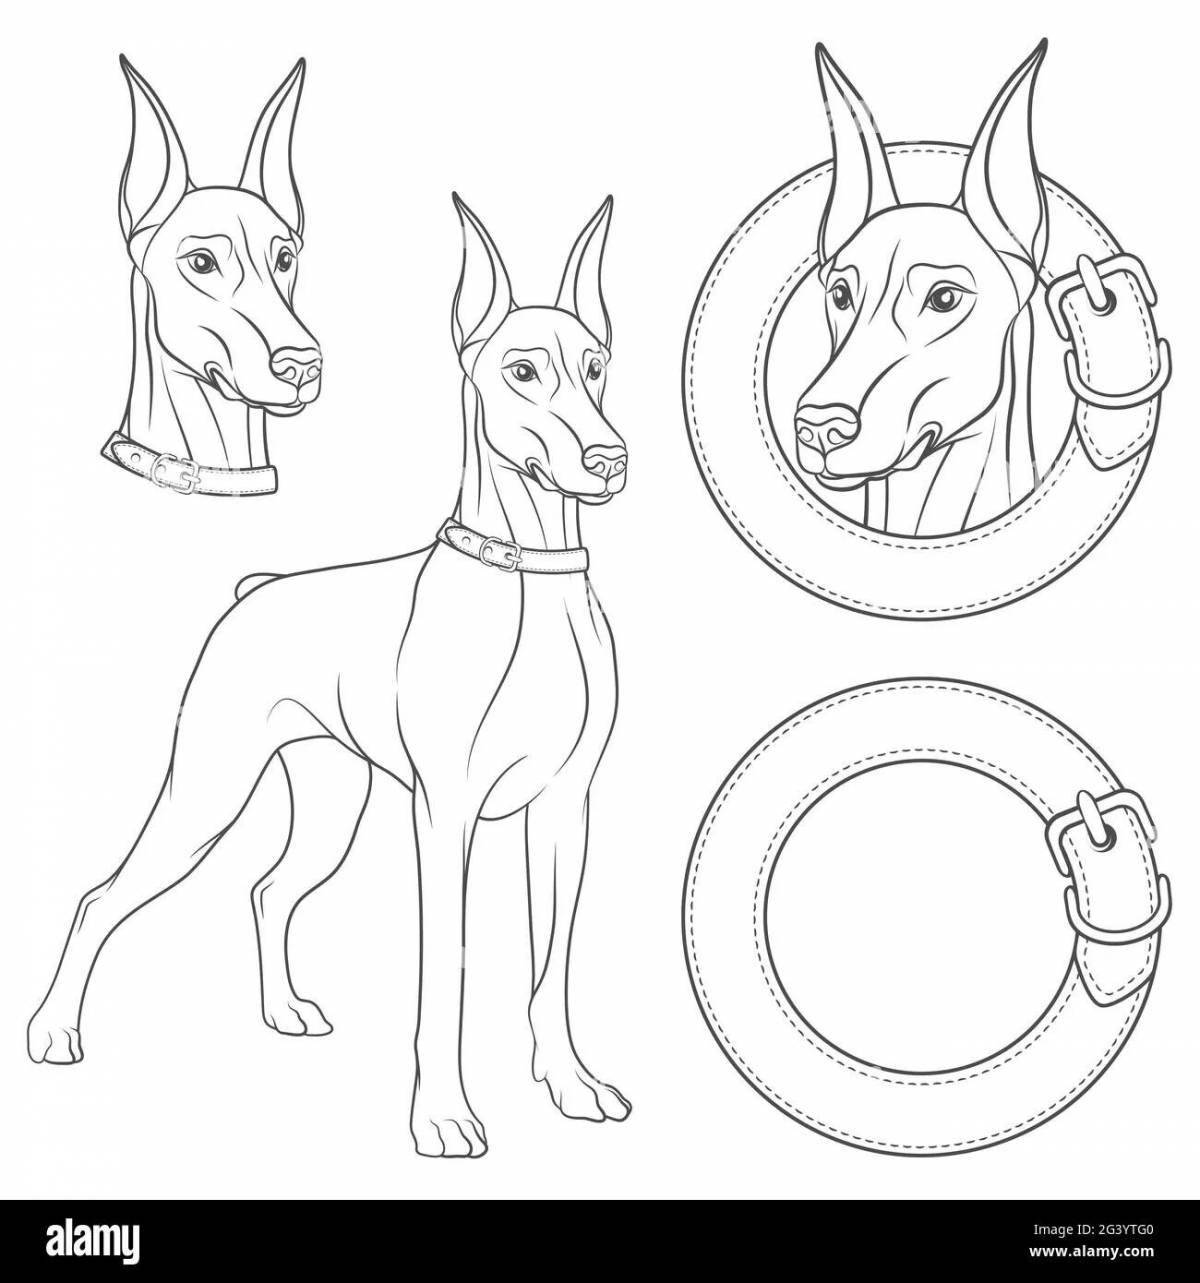 Impressive doberman dog coloring page